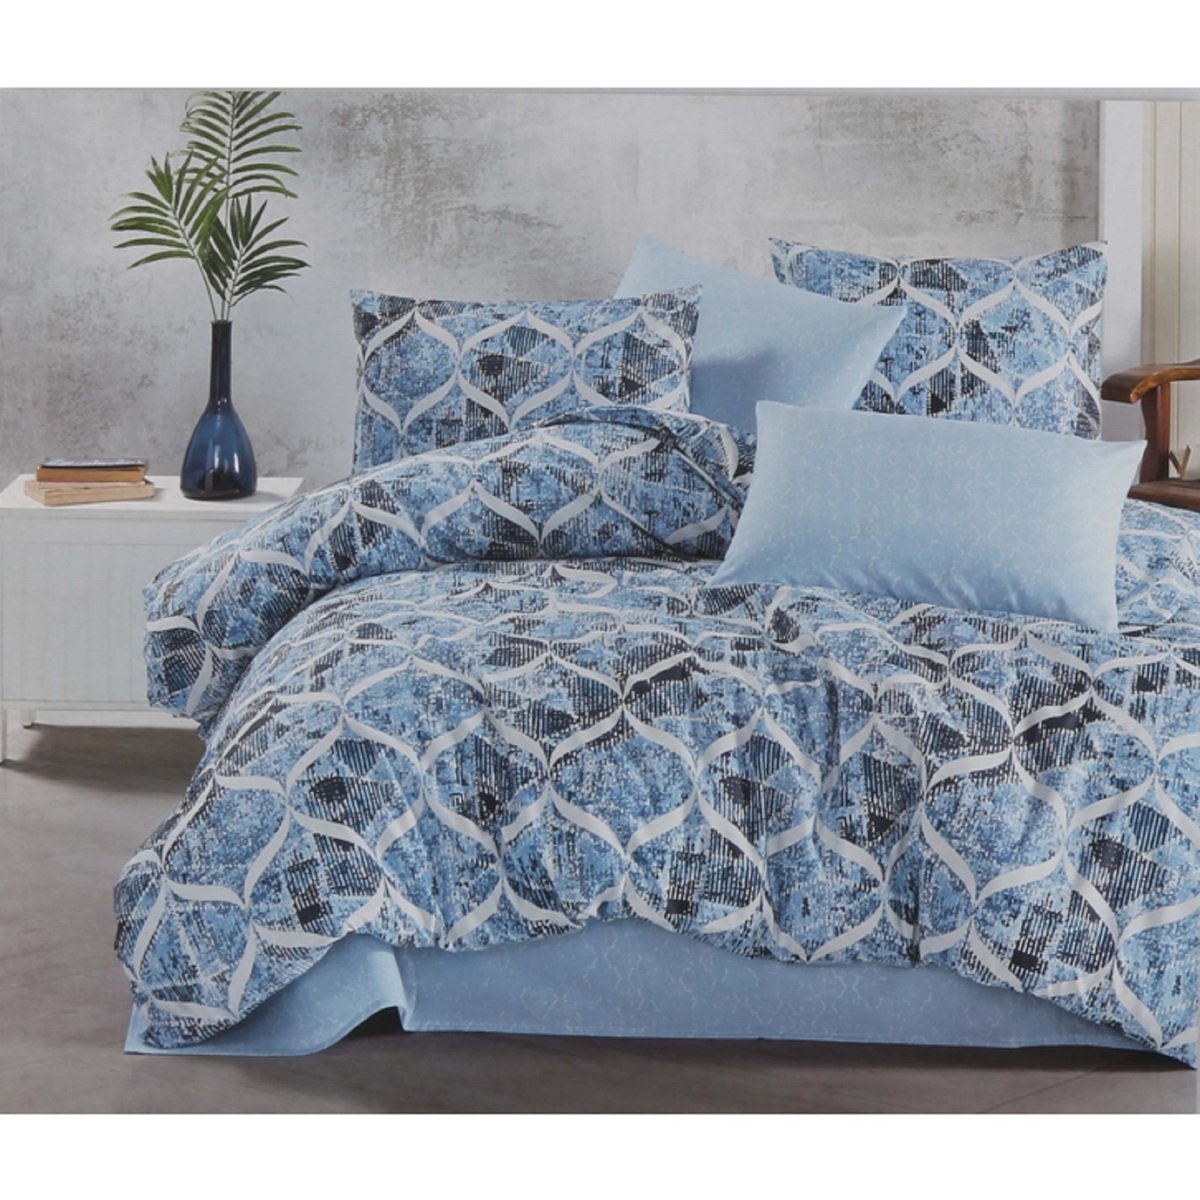 Cortigiani 4pcs Comforter Set 170x230cm Assorted